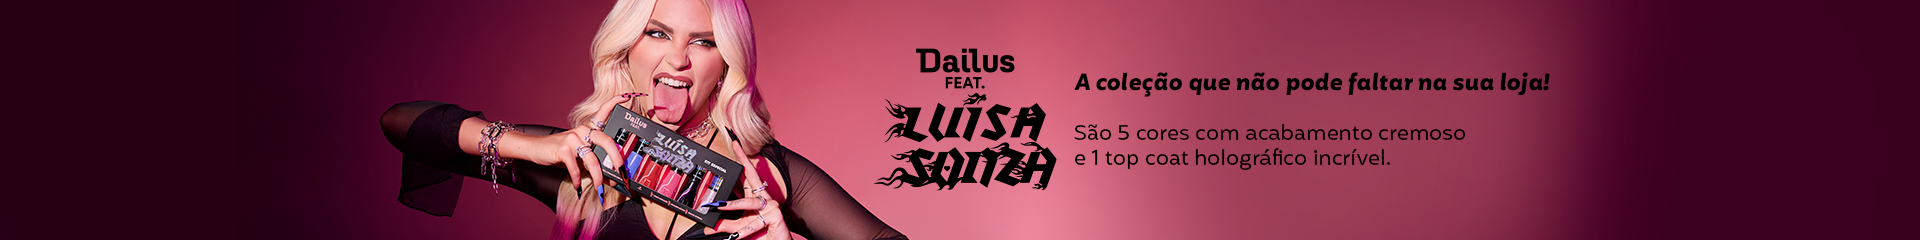 Dailus Feat. Luísa Sonza